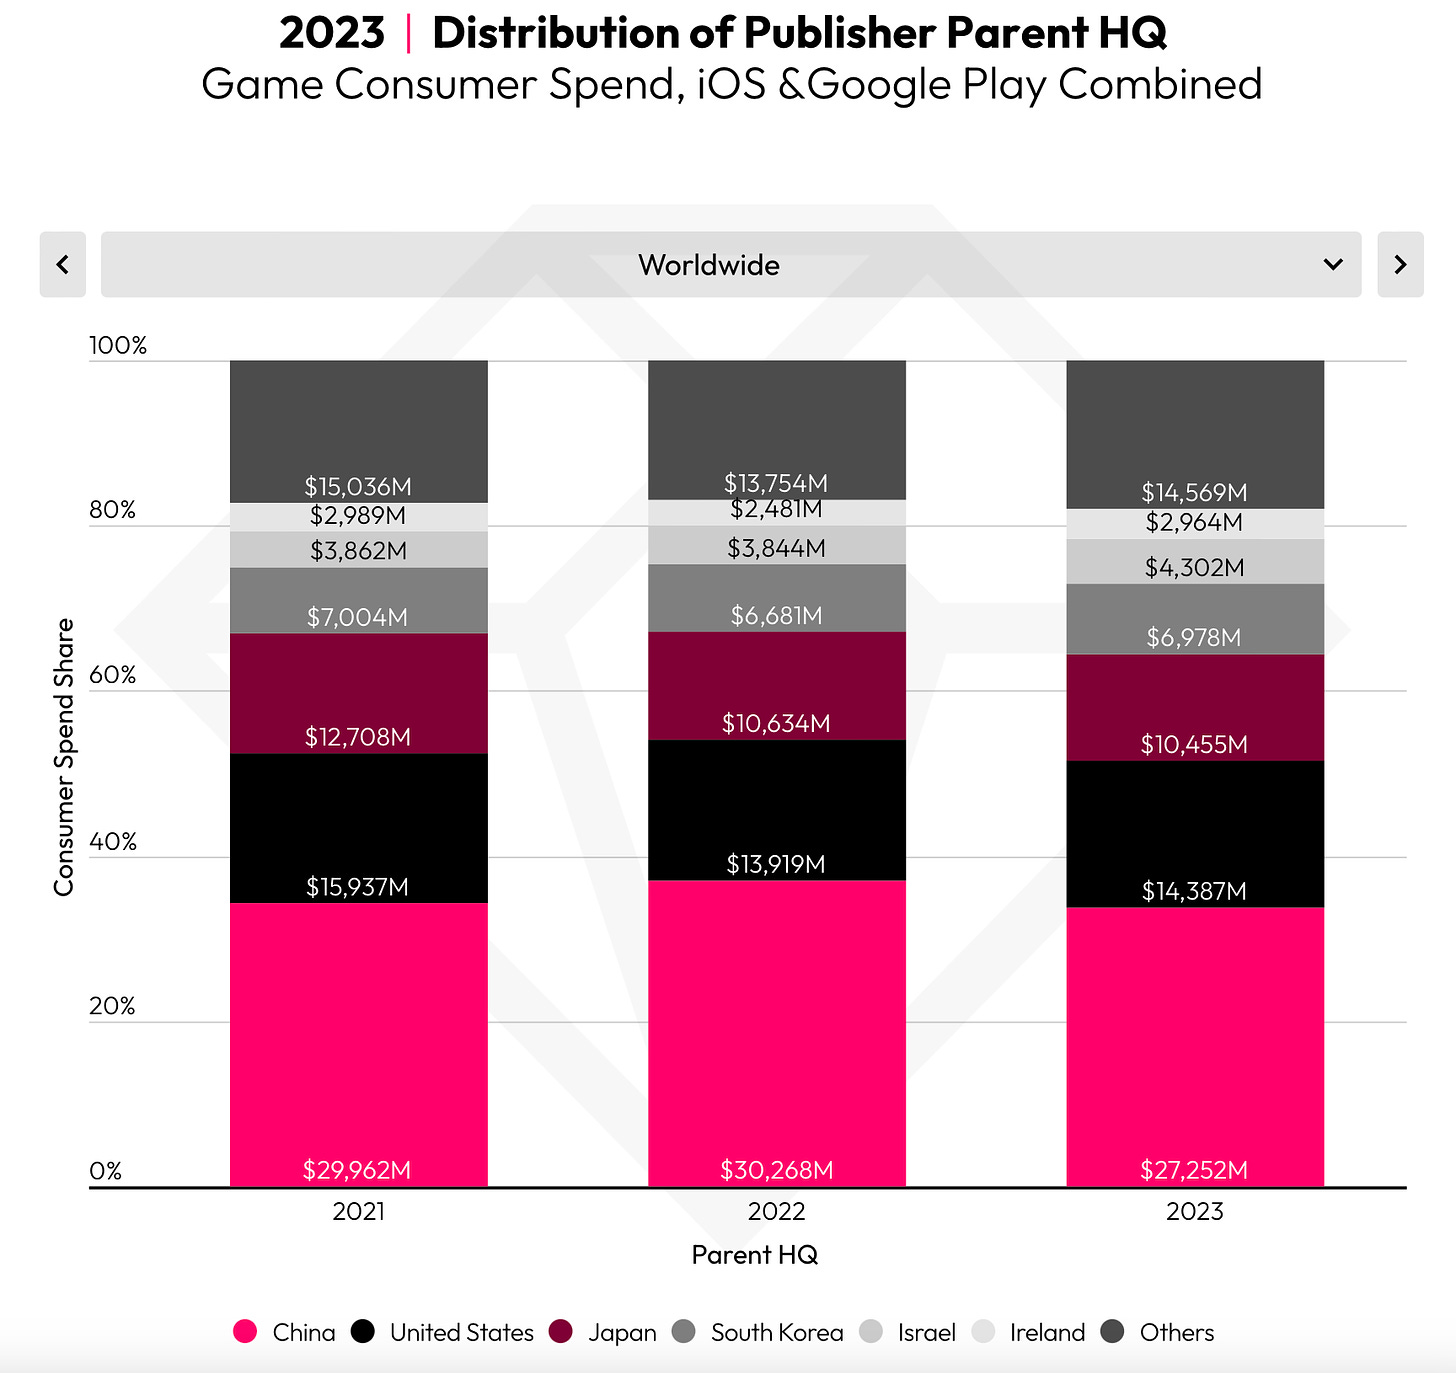 distribution of publisher parent HQ 2023